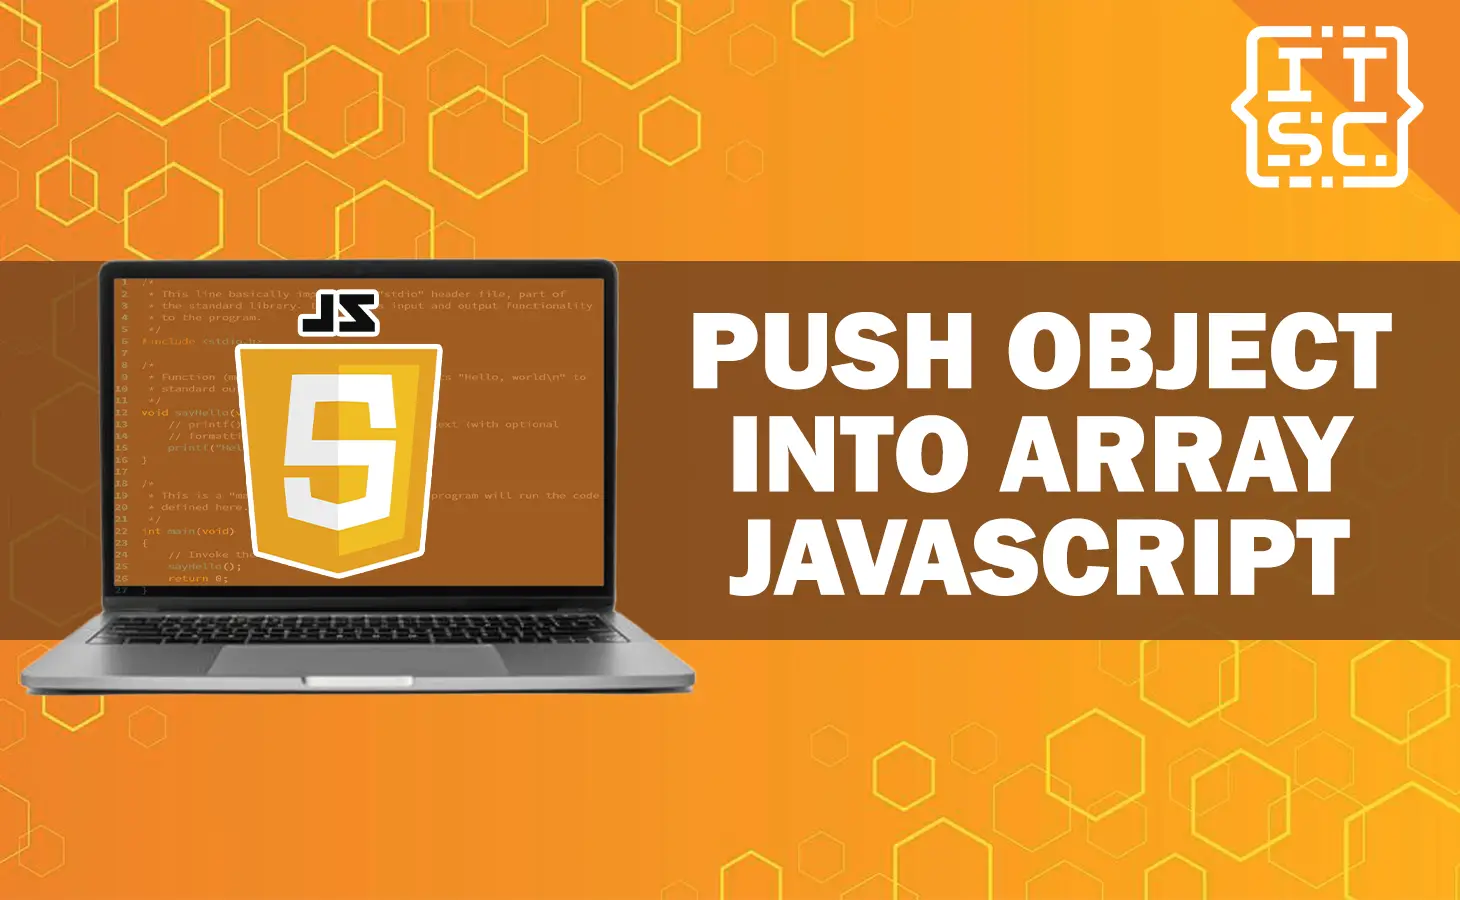 Push Object into Array JavaScript